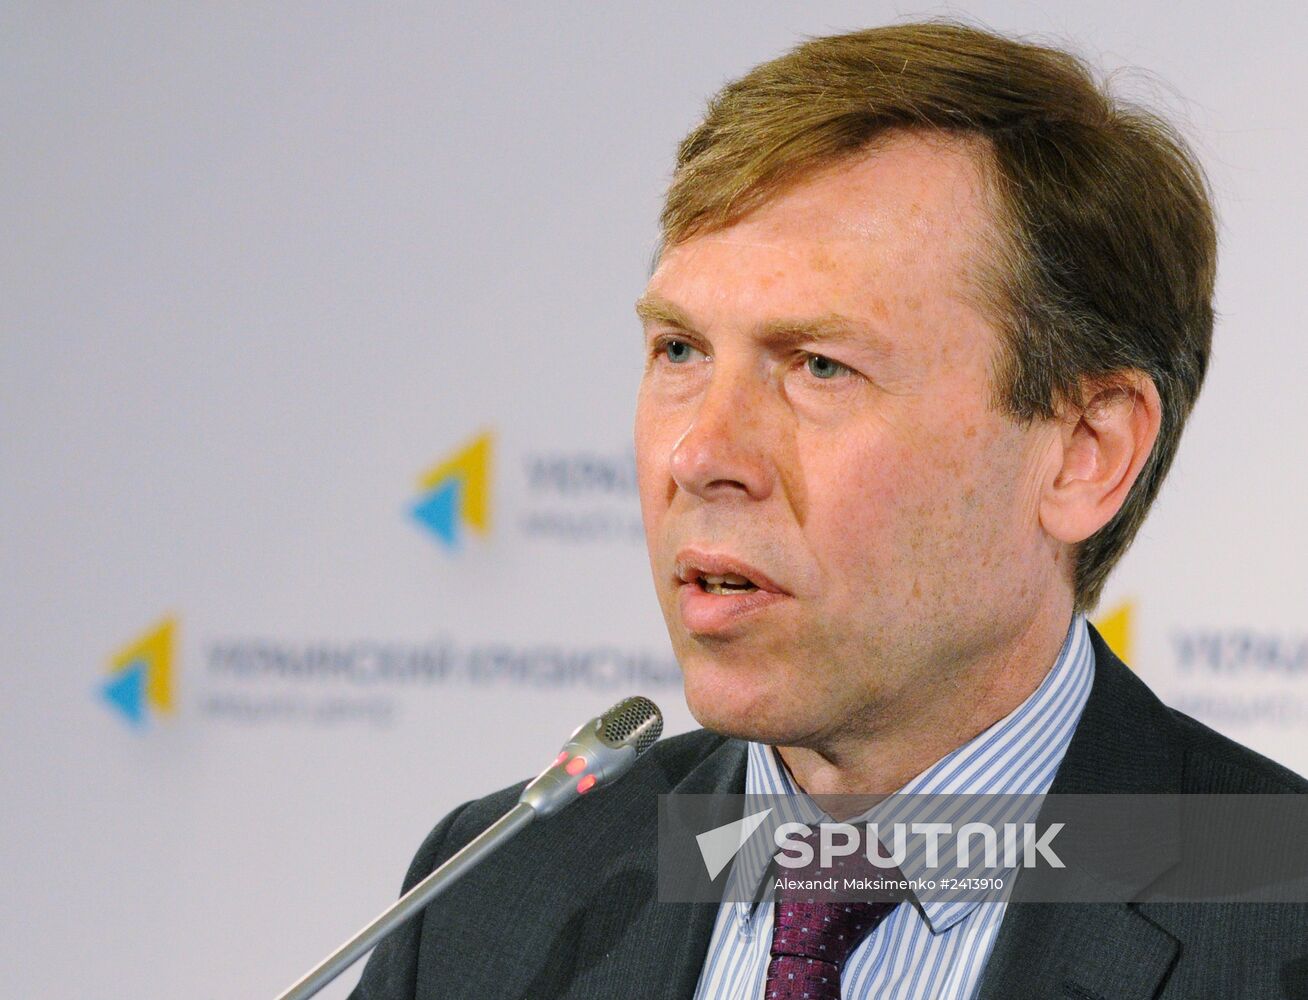 Batkivshchyna parliamentary party acting head Sergei Sobolev gives news conference